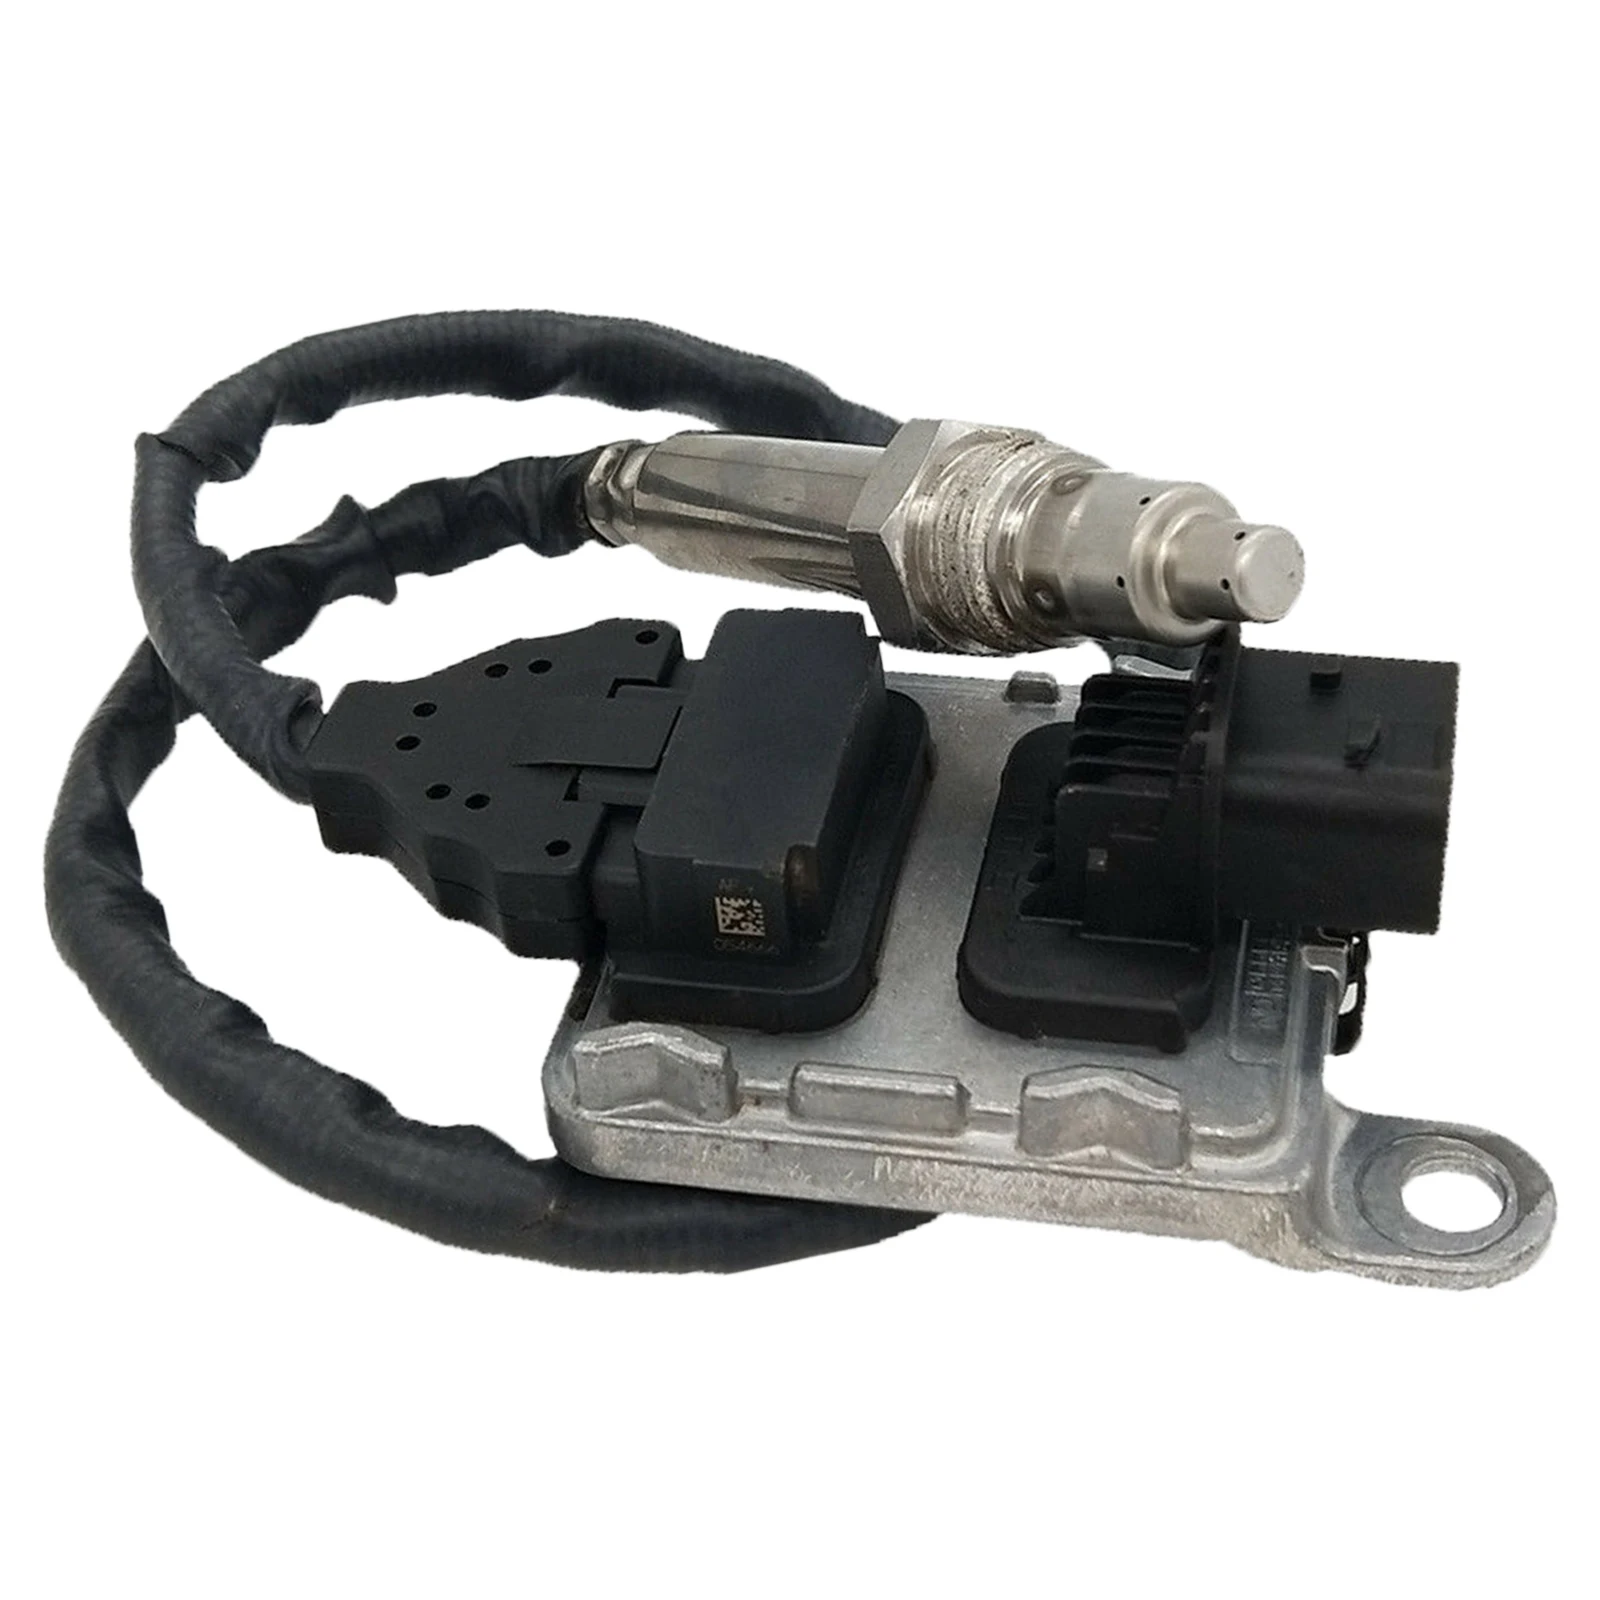 A0101531928 Nitrogen Oxide Sensor Nox Sensor for Mercedes Detroit Engine Inlet DD13 DD16 Car Accessories